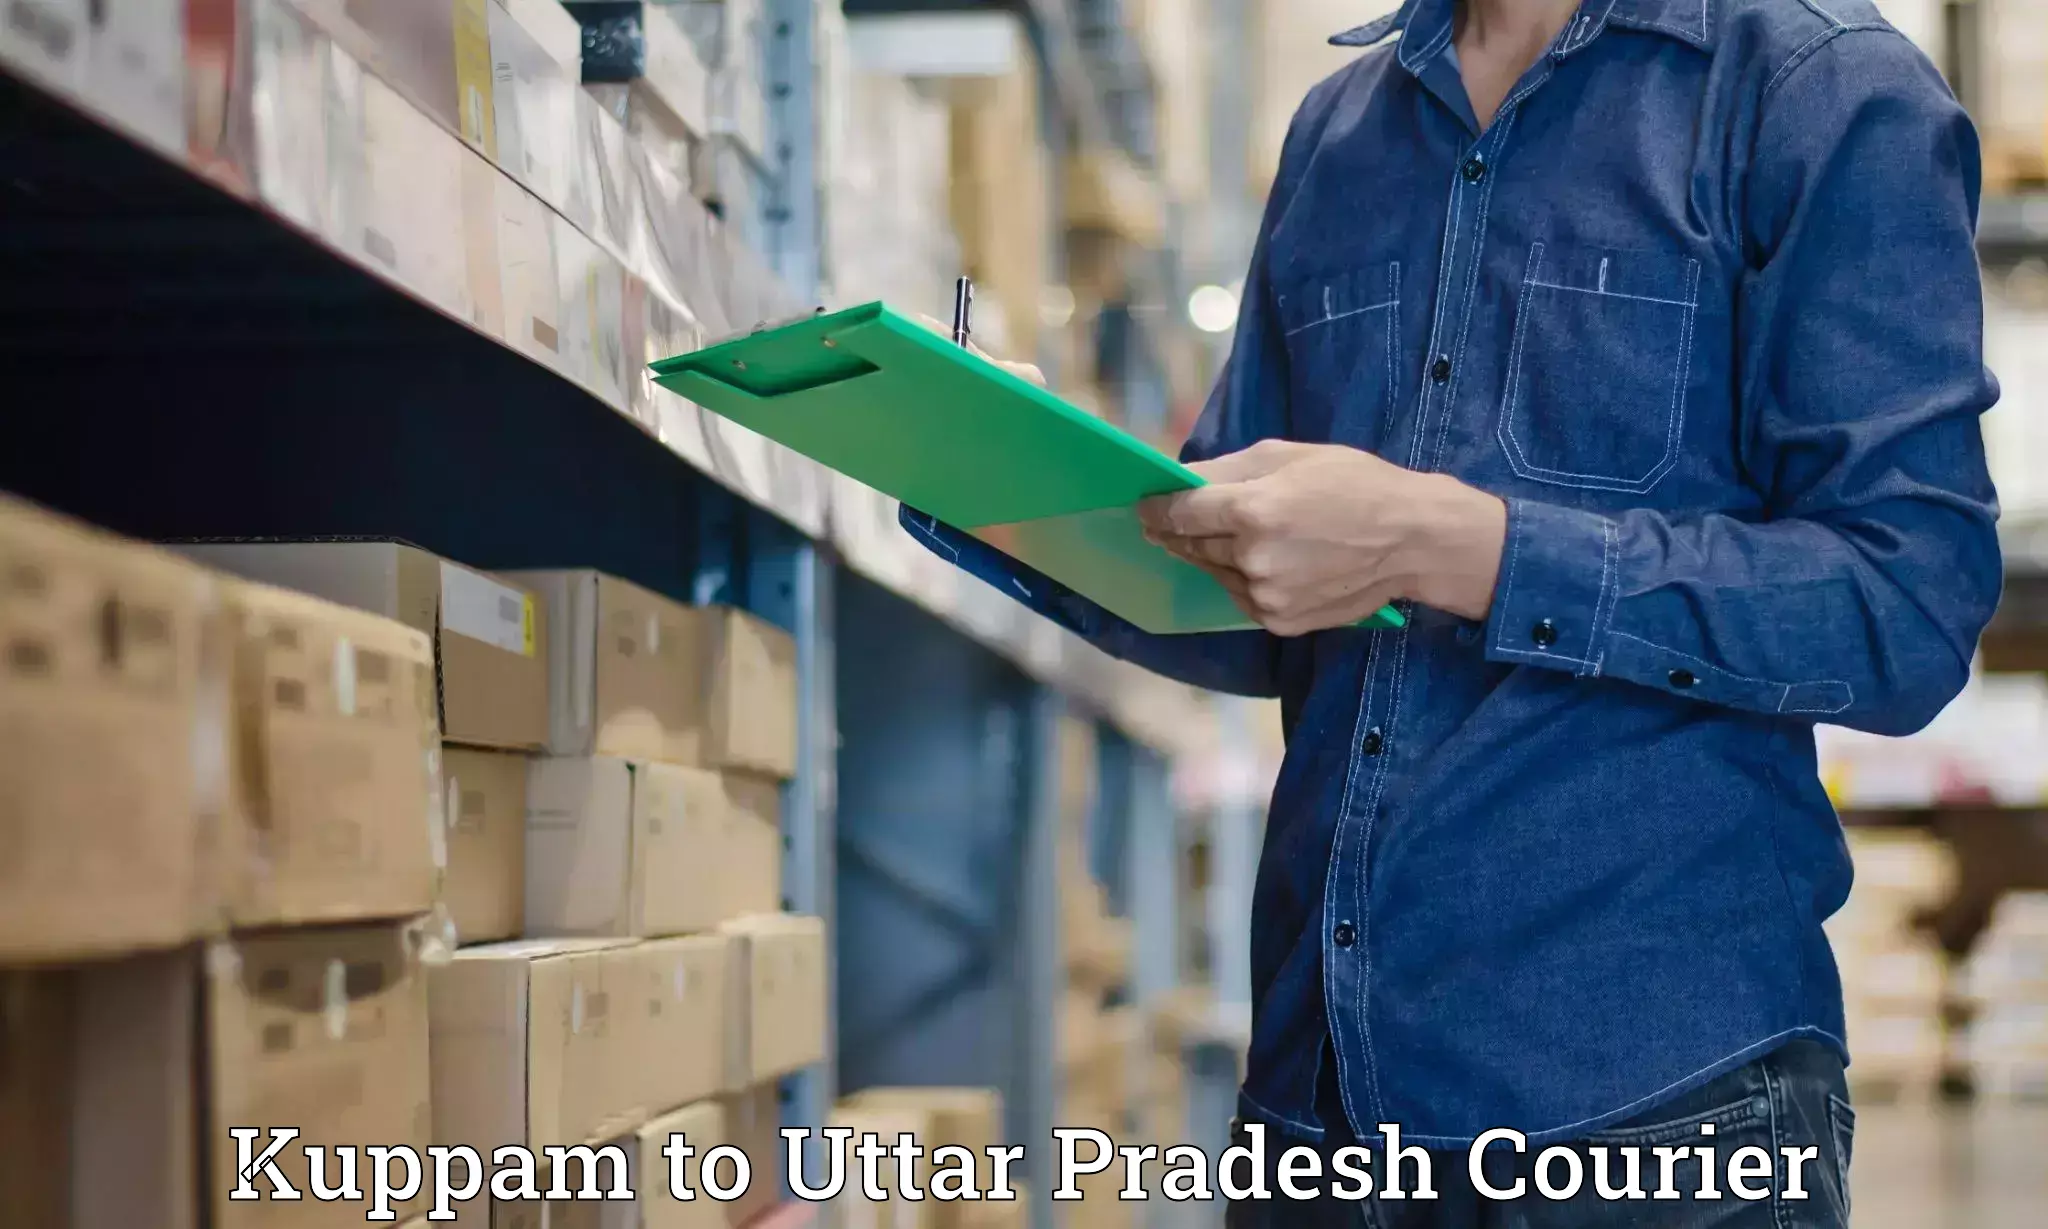 Express mail service Kuppam to Aligarh Muslim University